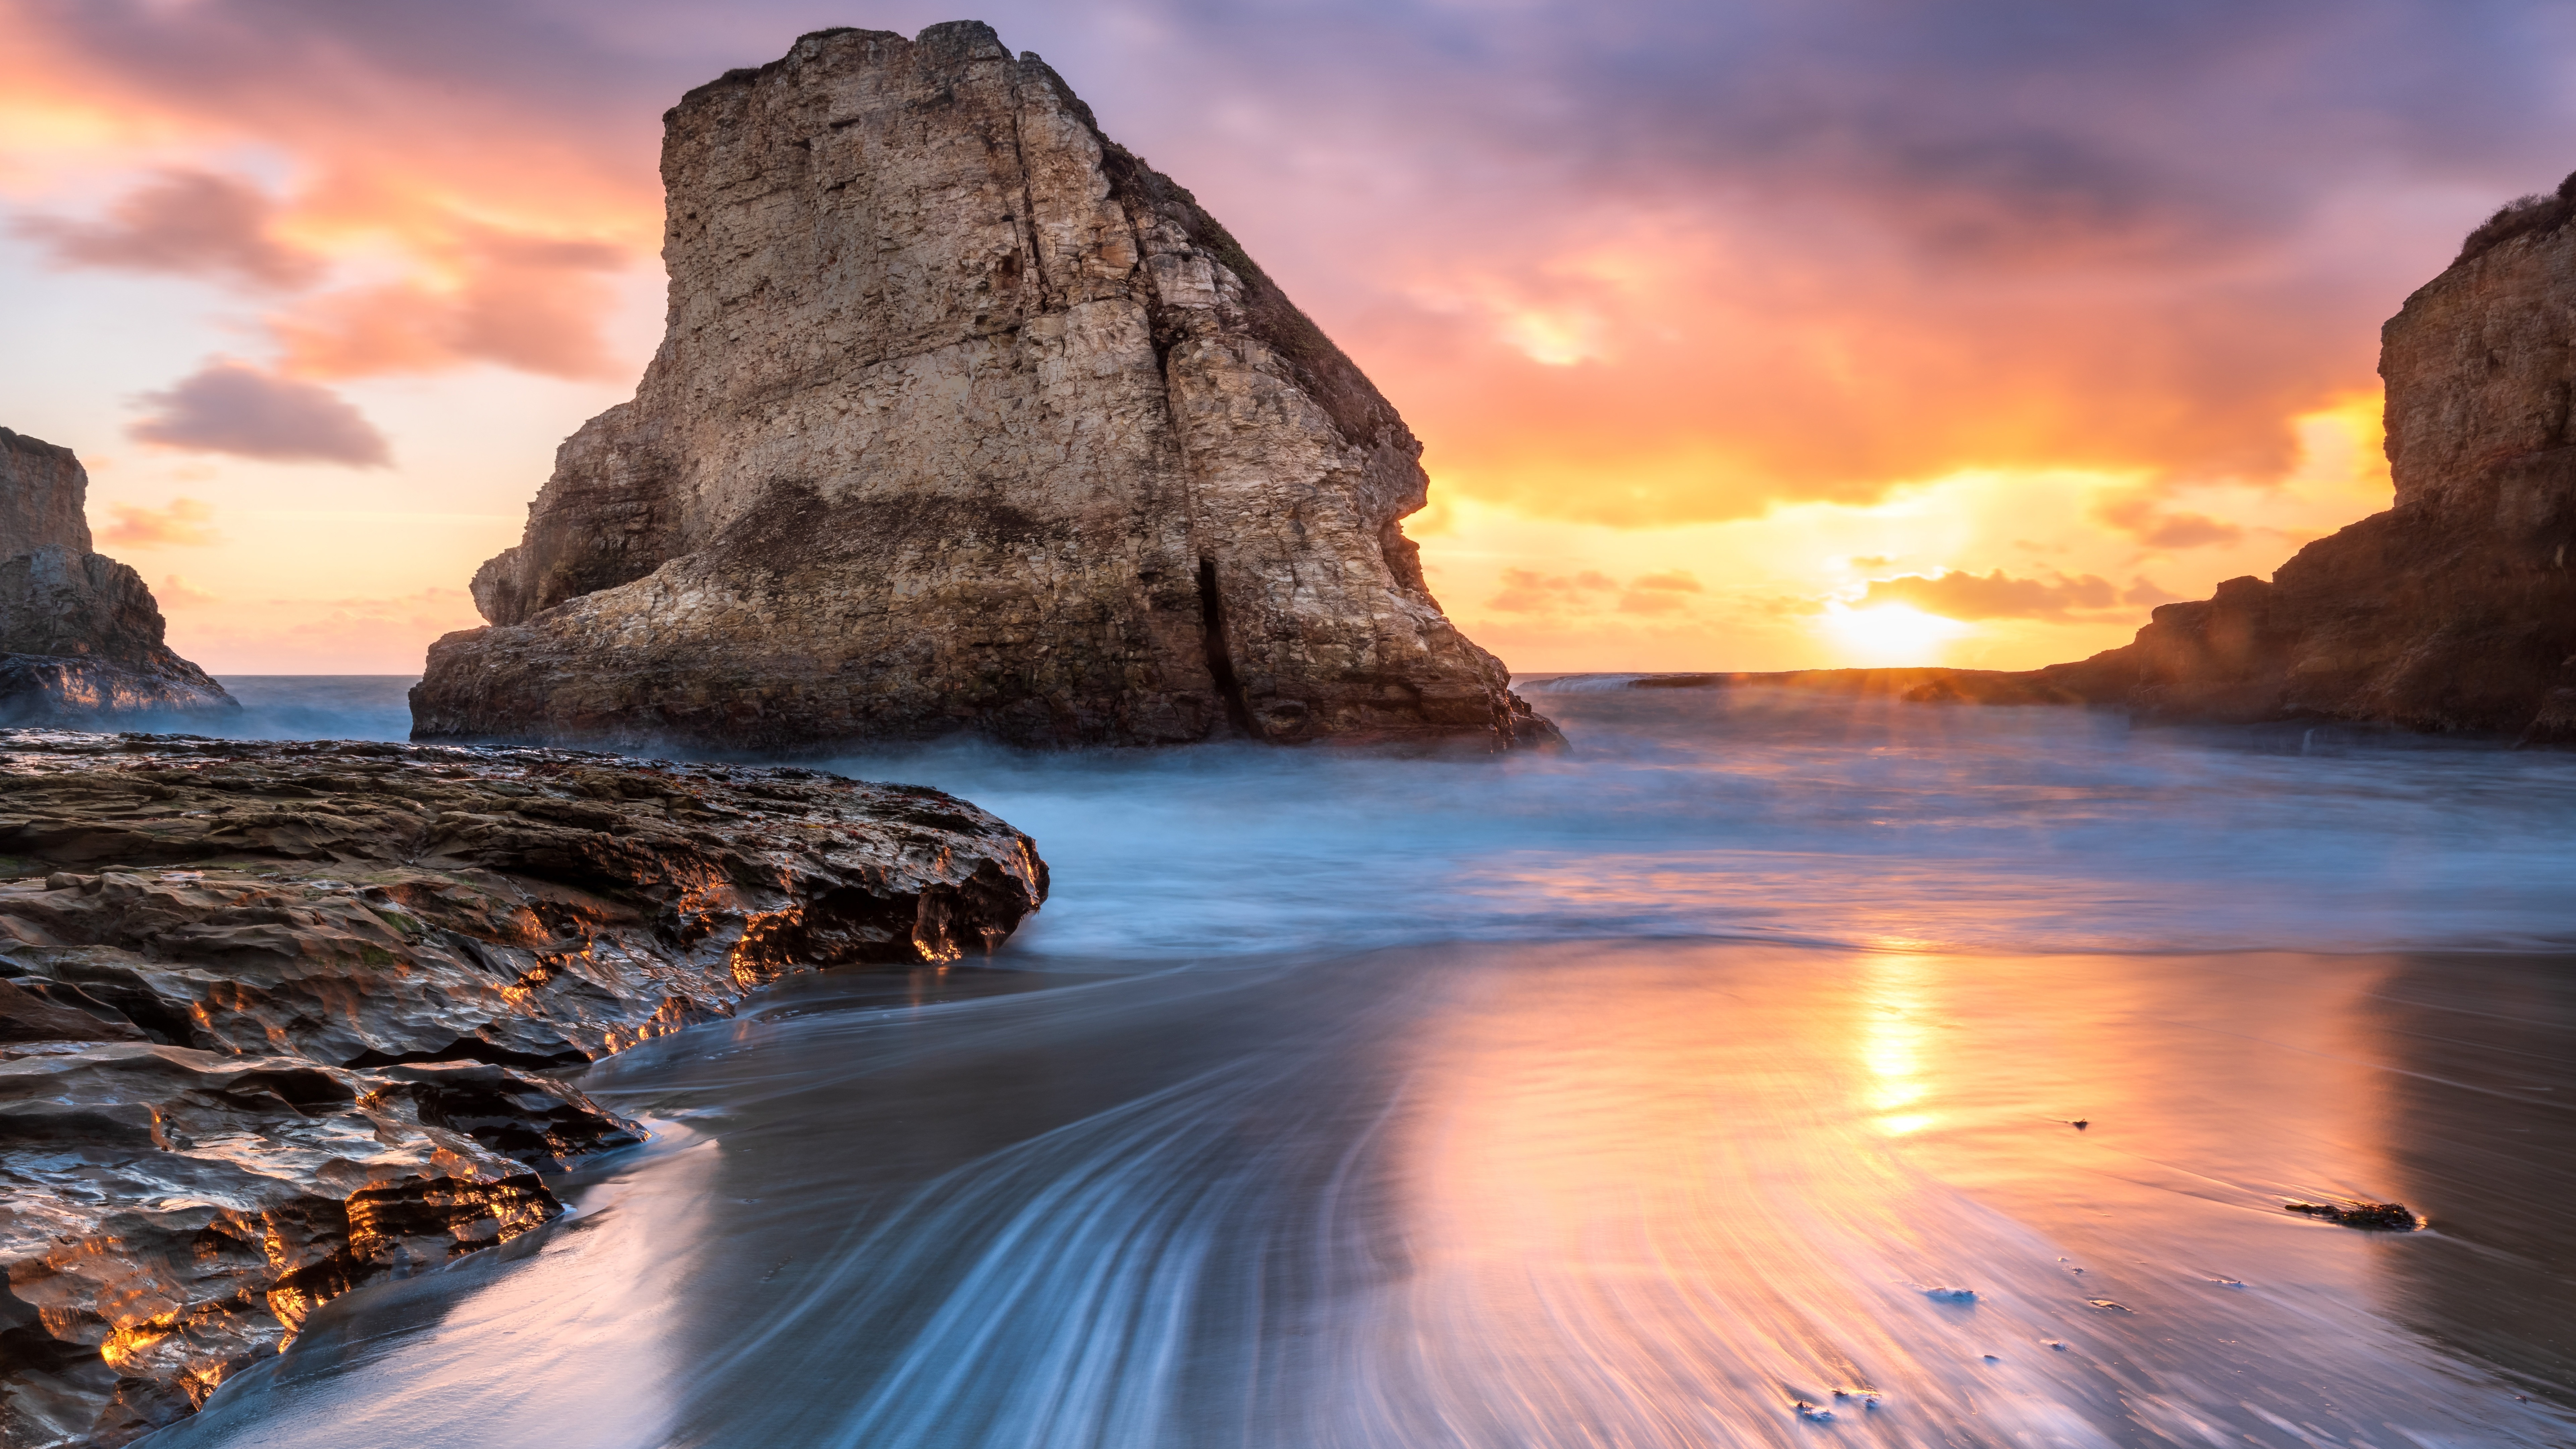 Ultra quality. Море скалы закат. Красивая природа картинки фото. Рассвет на море. Океан пляж.